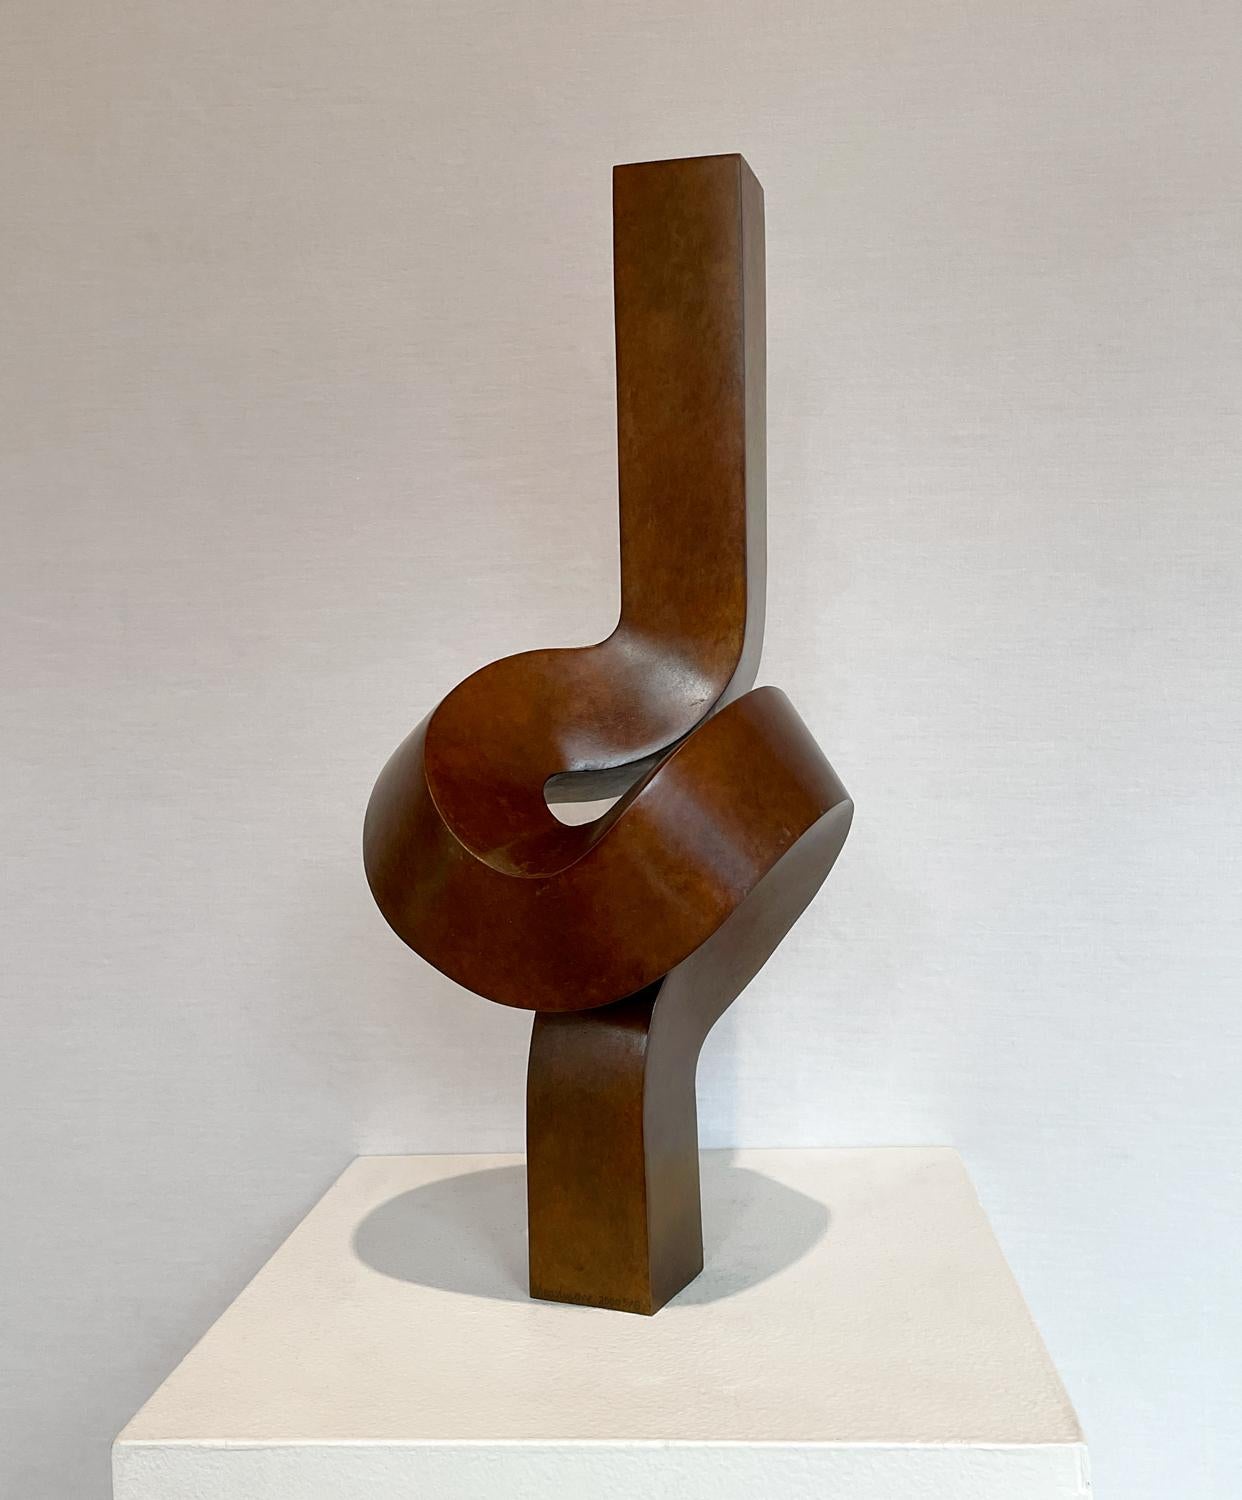 Clement Meadmore Abstract Sculpture – Minimalistische Bronzeskulptur „Upright“ 